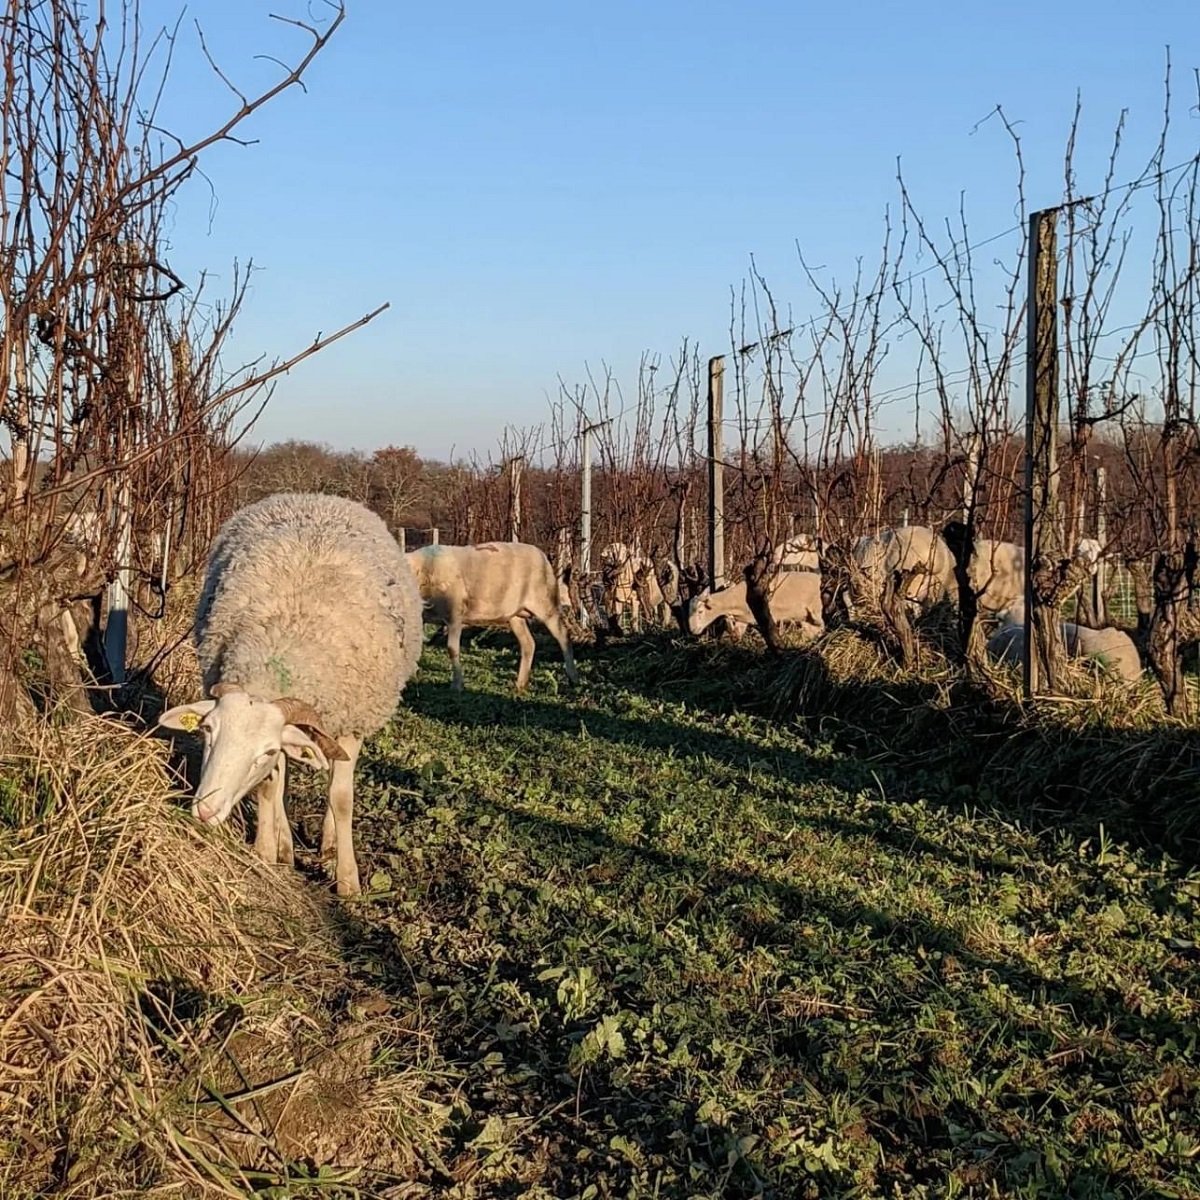 France_Gascogne_Pajot_sheep in vineyards_April_spring.jpg